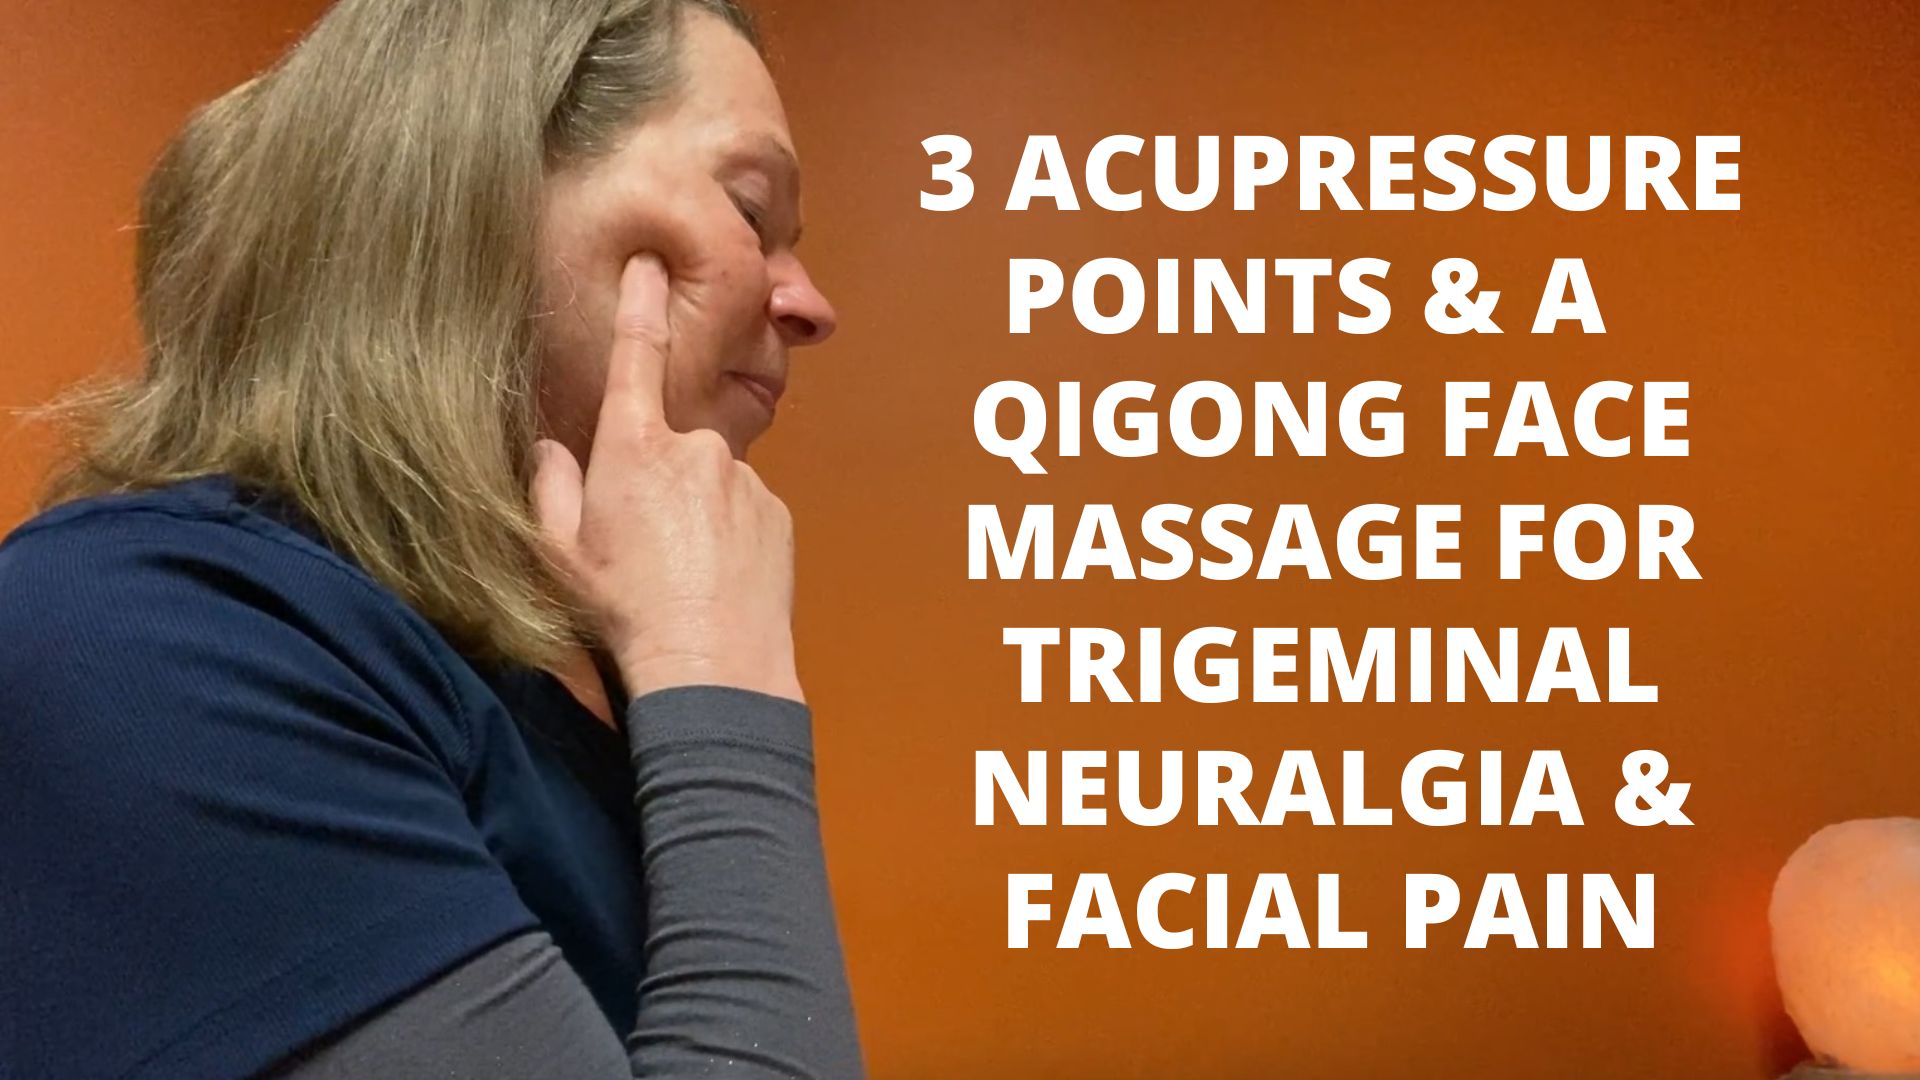 Trigeminal Neuralgia & Facial Pain | 3 Acupressure Points & A Qigong Face Massage